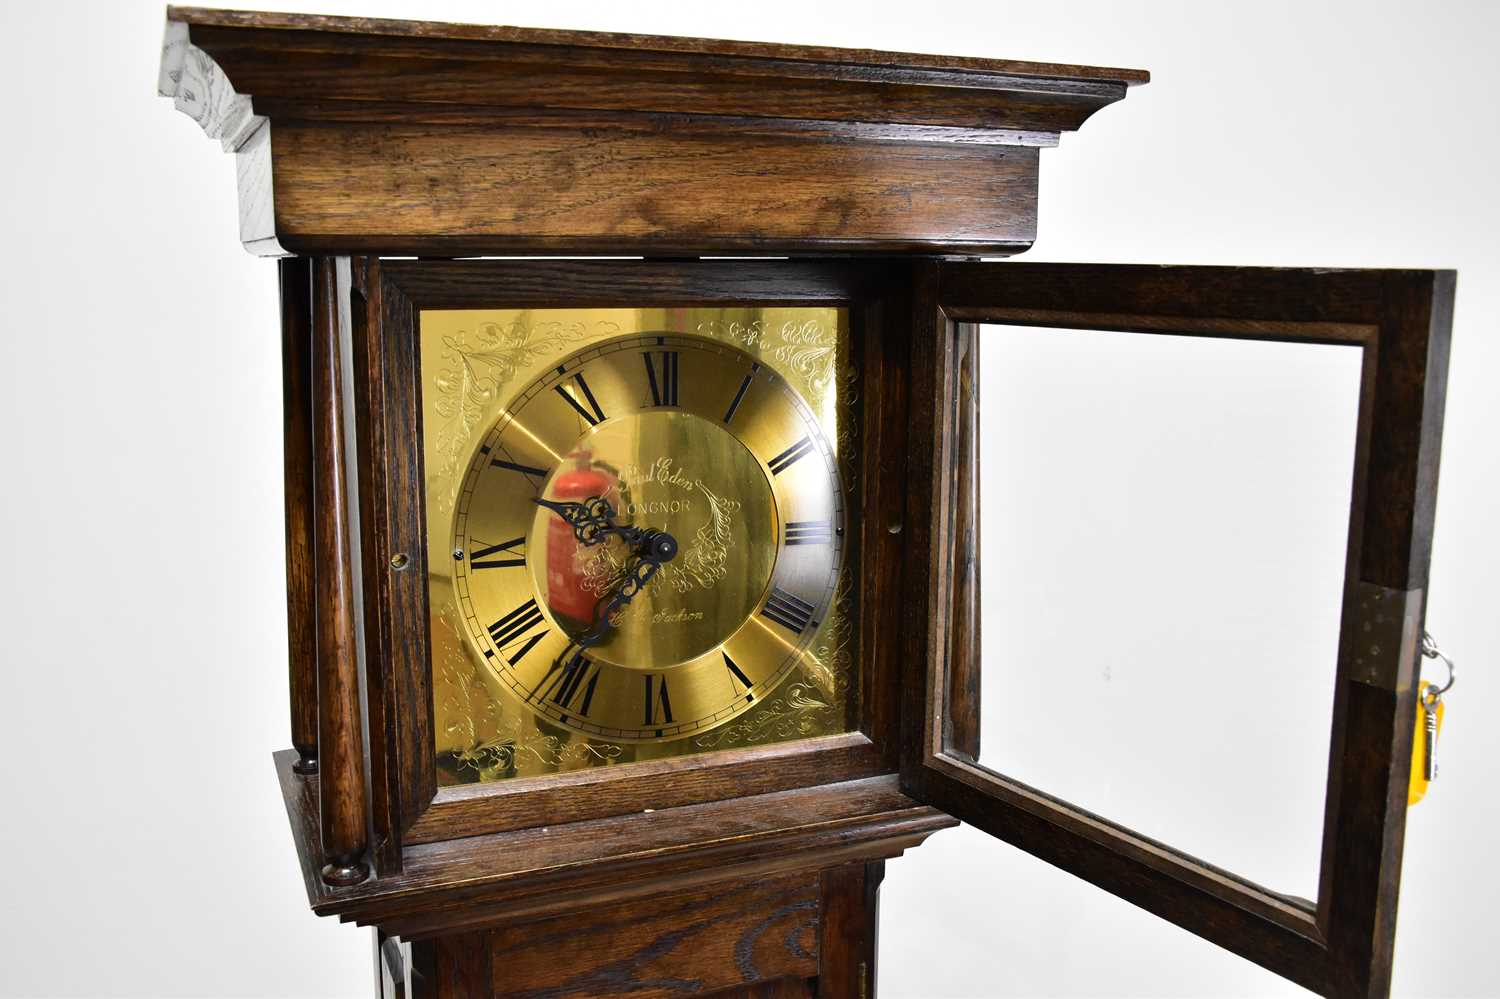 PAUL EDEN, LONGNOR; a reproduction oak longcase clock of small proportions, height 188cm. - Image 2 of 4